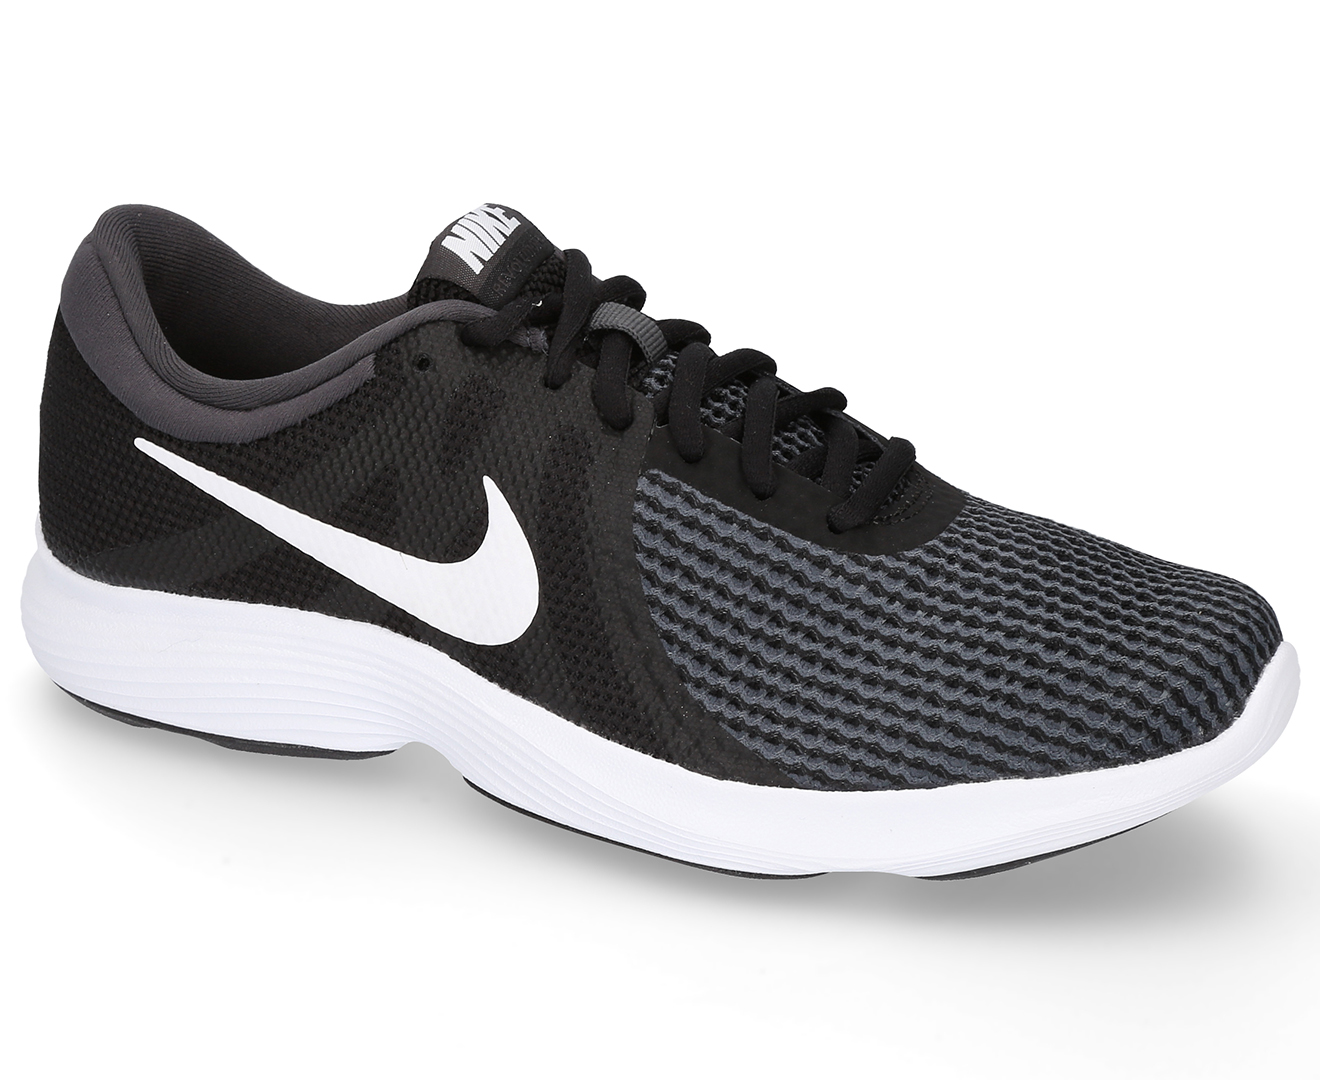 Nike Women's Revolution 4 Shoe - Black/White-Anthracite | Catch.com.au